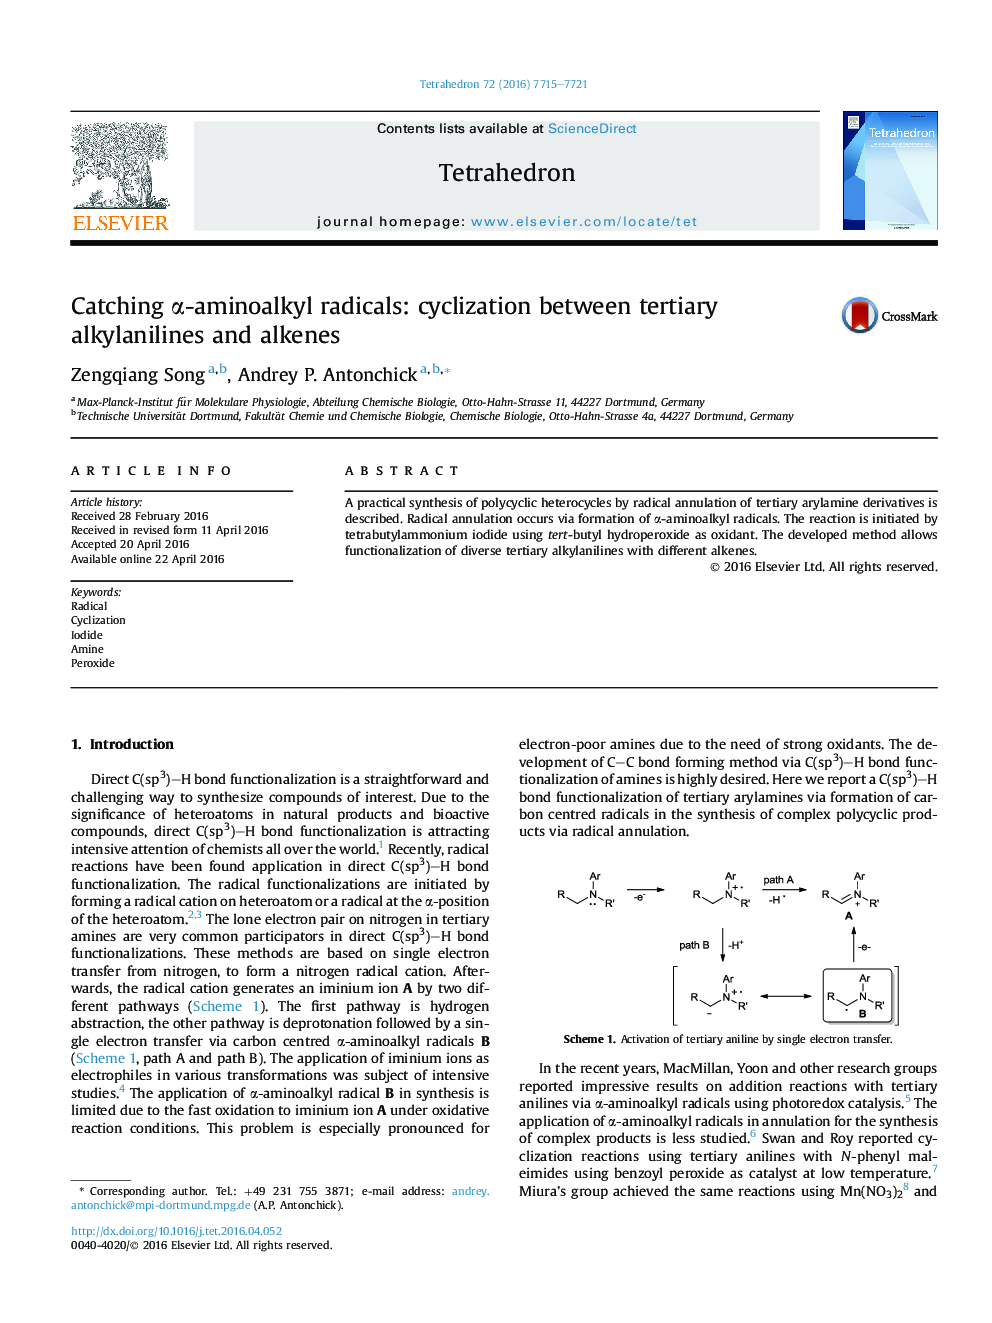 Catching Î±-aminoalkyl radicals: cyclization between tertiary alkylanilines and alkenes